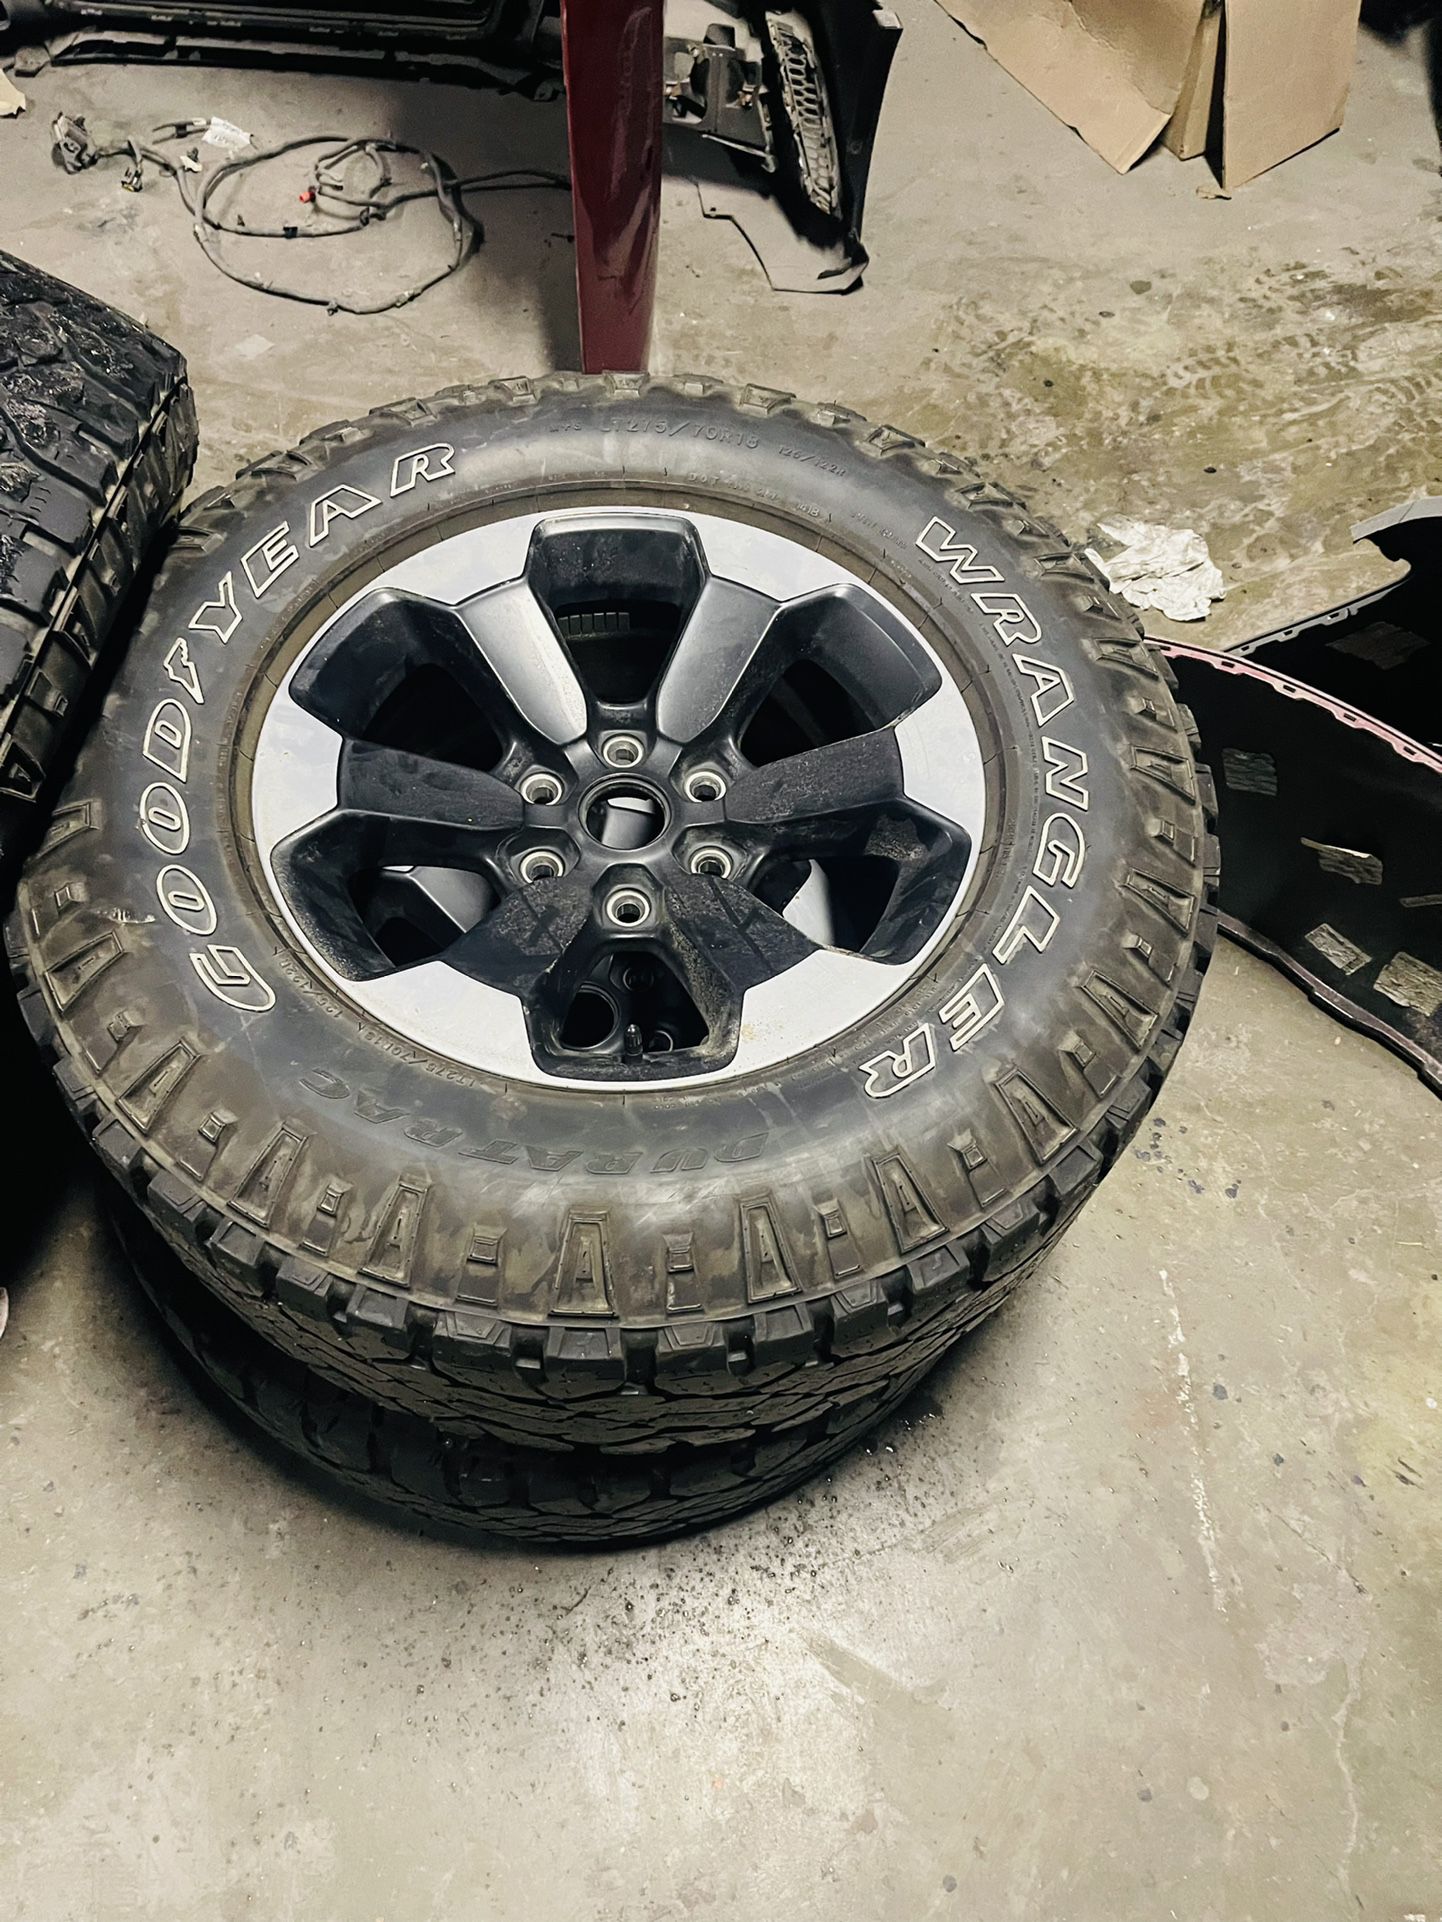 2019-21 Dodge Ram 1500 Rebel Rims And Tires Excellent Shape